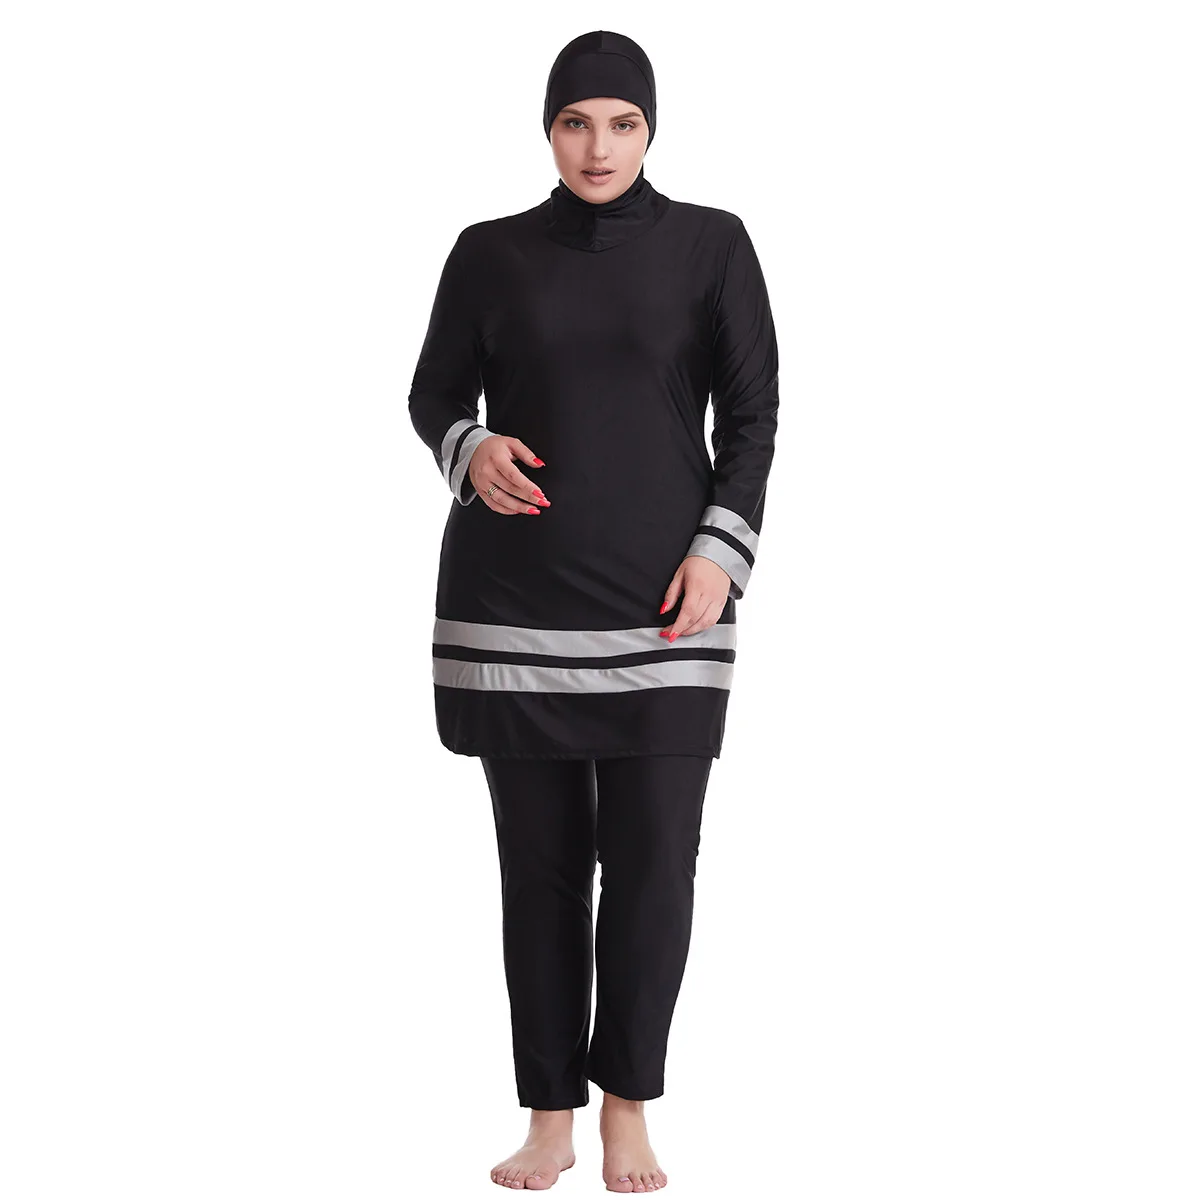 Women's Swimsuit Plus Size High Waisted Tummy Control Swimwear Muslim Swimsuit Full Coverage Brazilian Bikini Bathing Suit 2021 images - 6